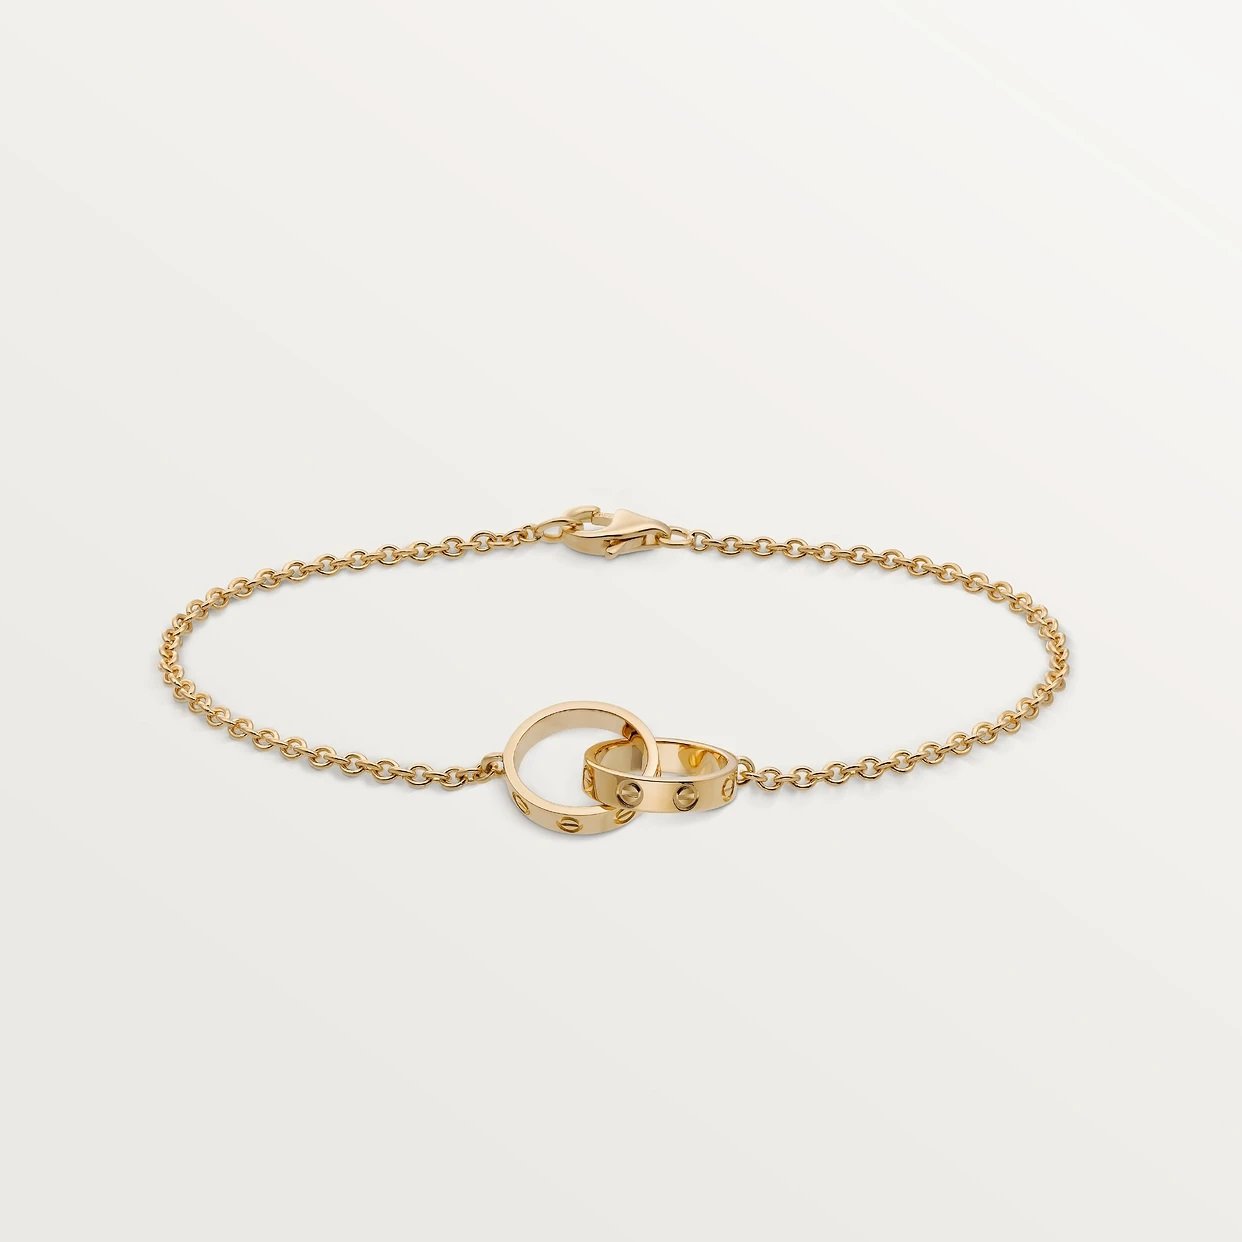 Cartier Love Chain Bracelet in Yellow Gold.jpg